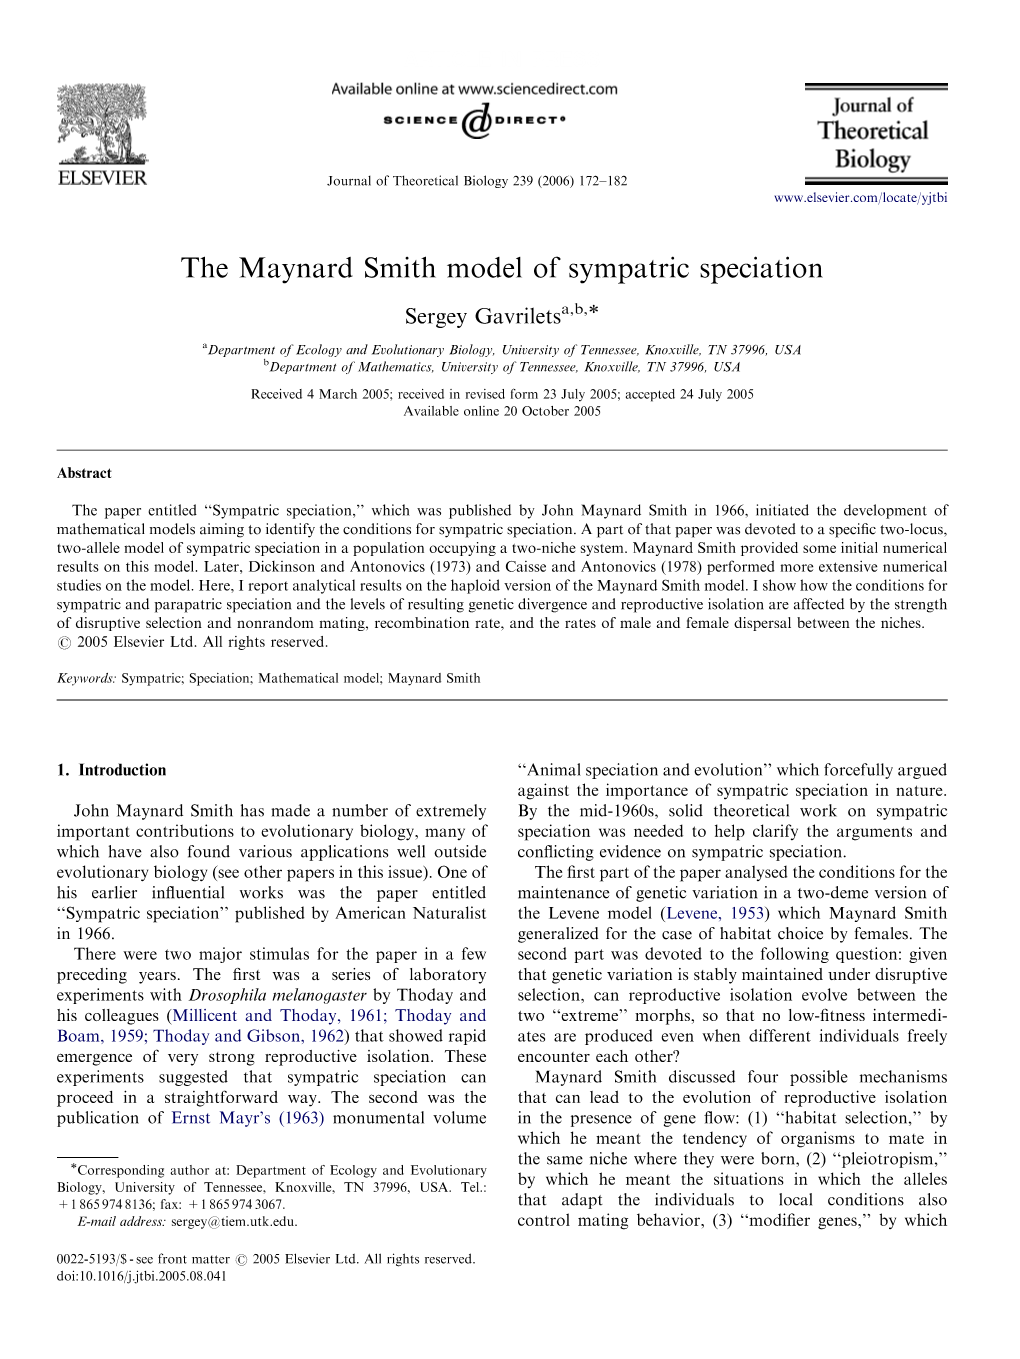 The Maynard Smith Model of Sympatric Speciation